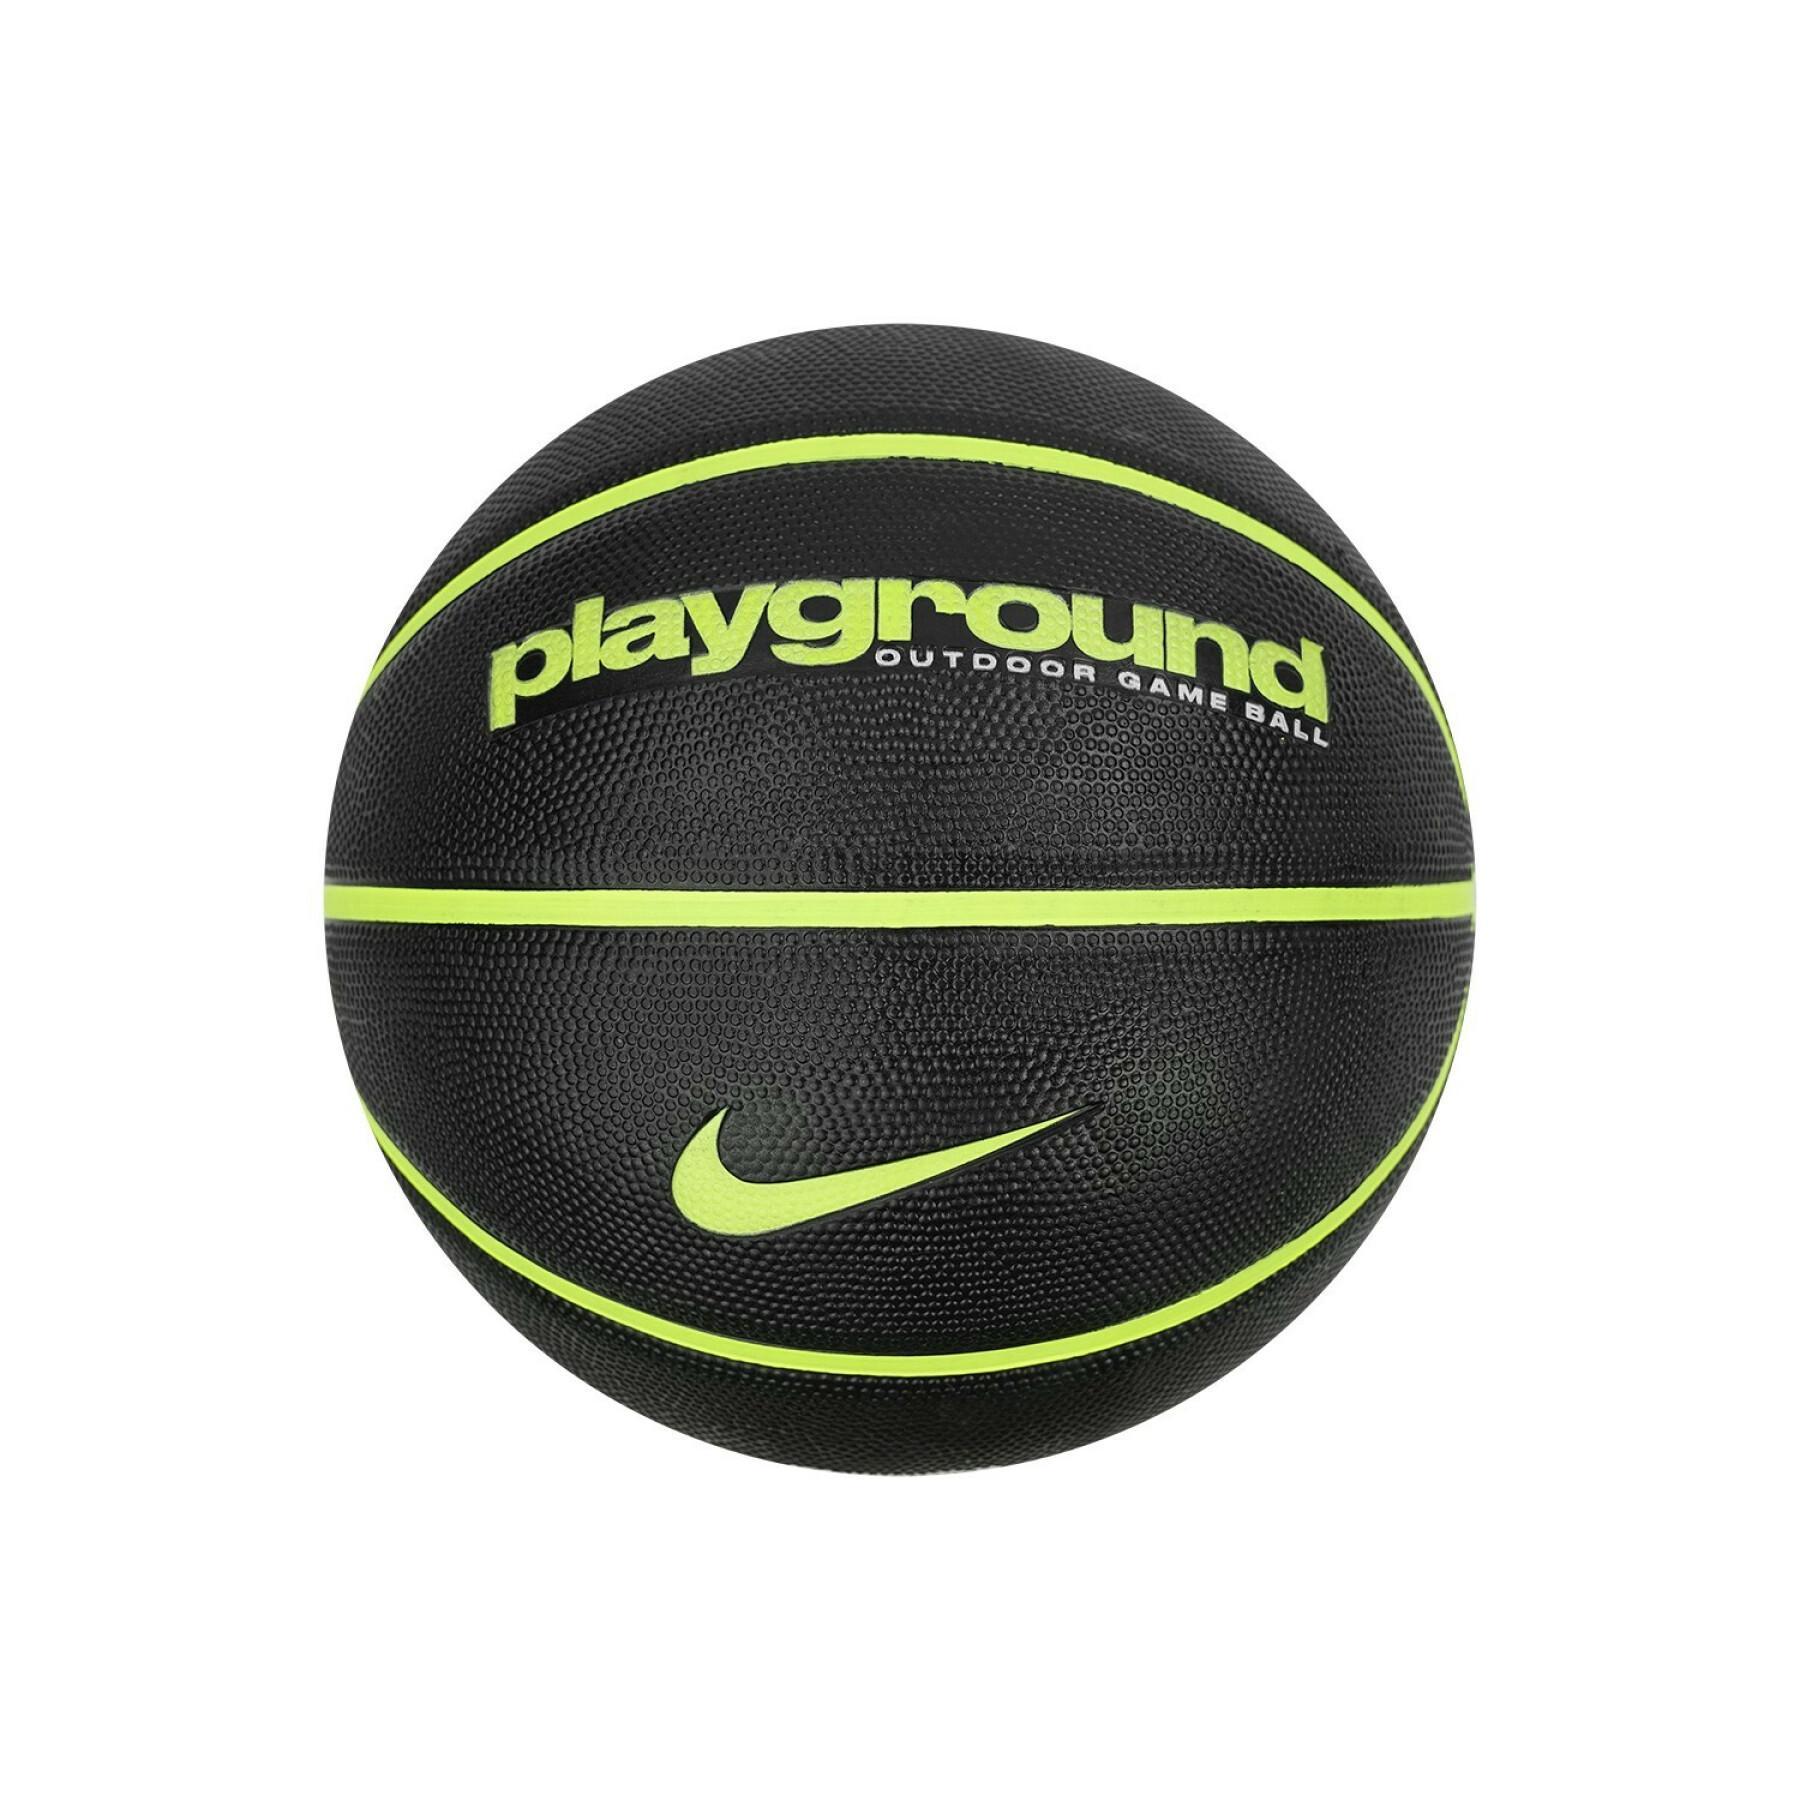 Baloncesto Nike Everyday Playground 8P Deflated